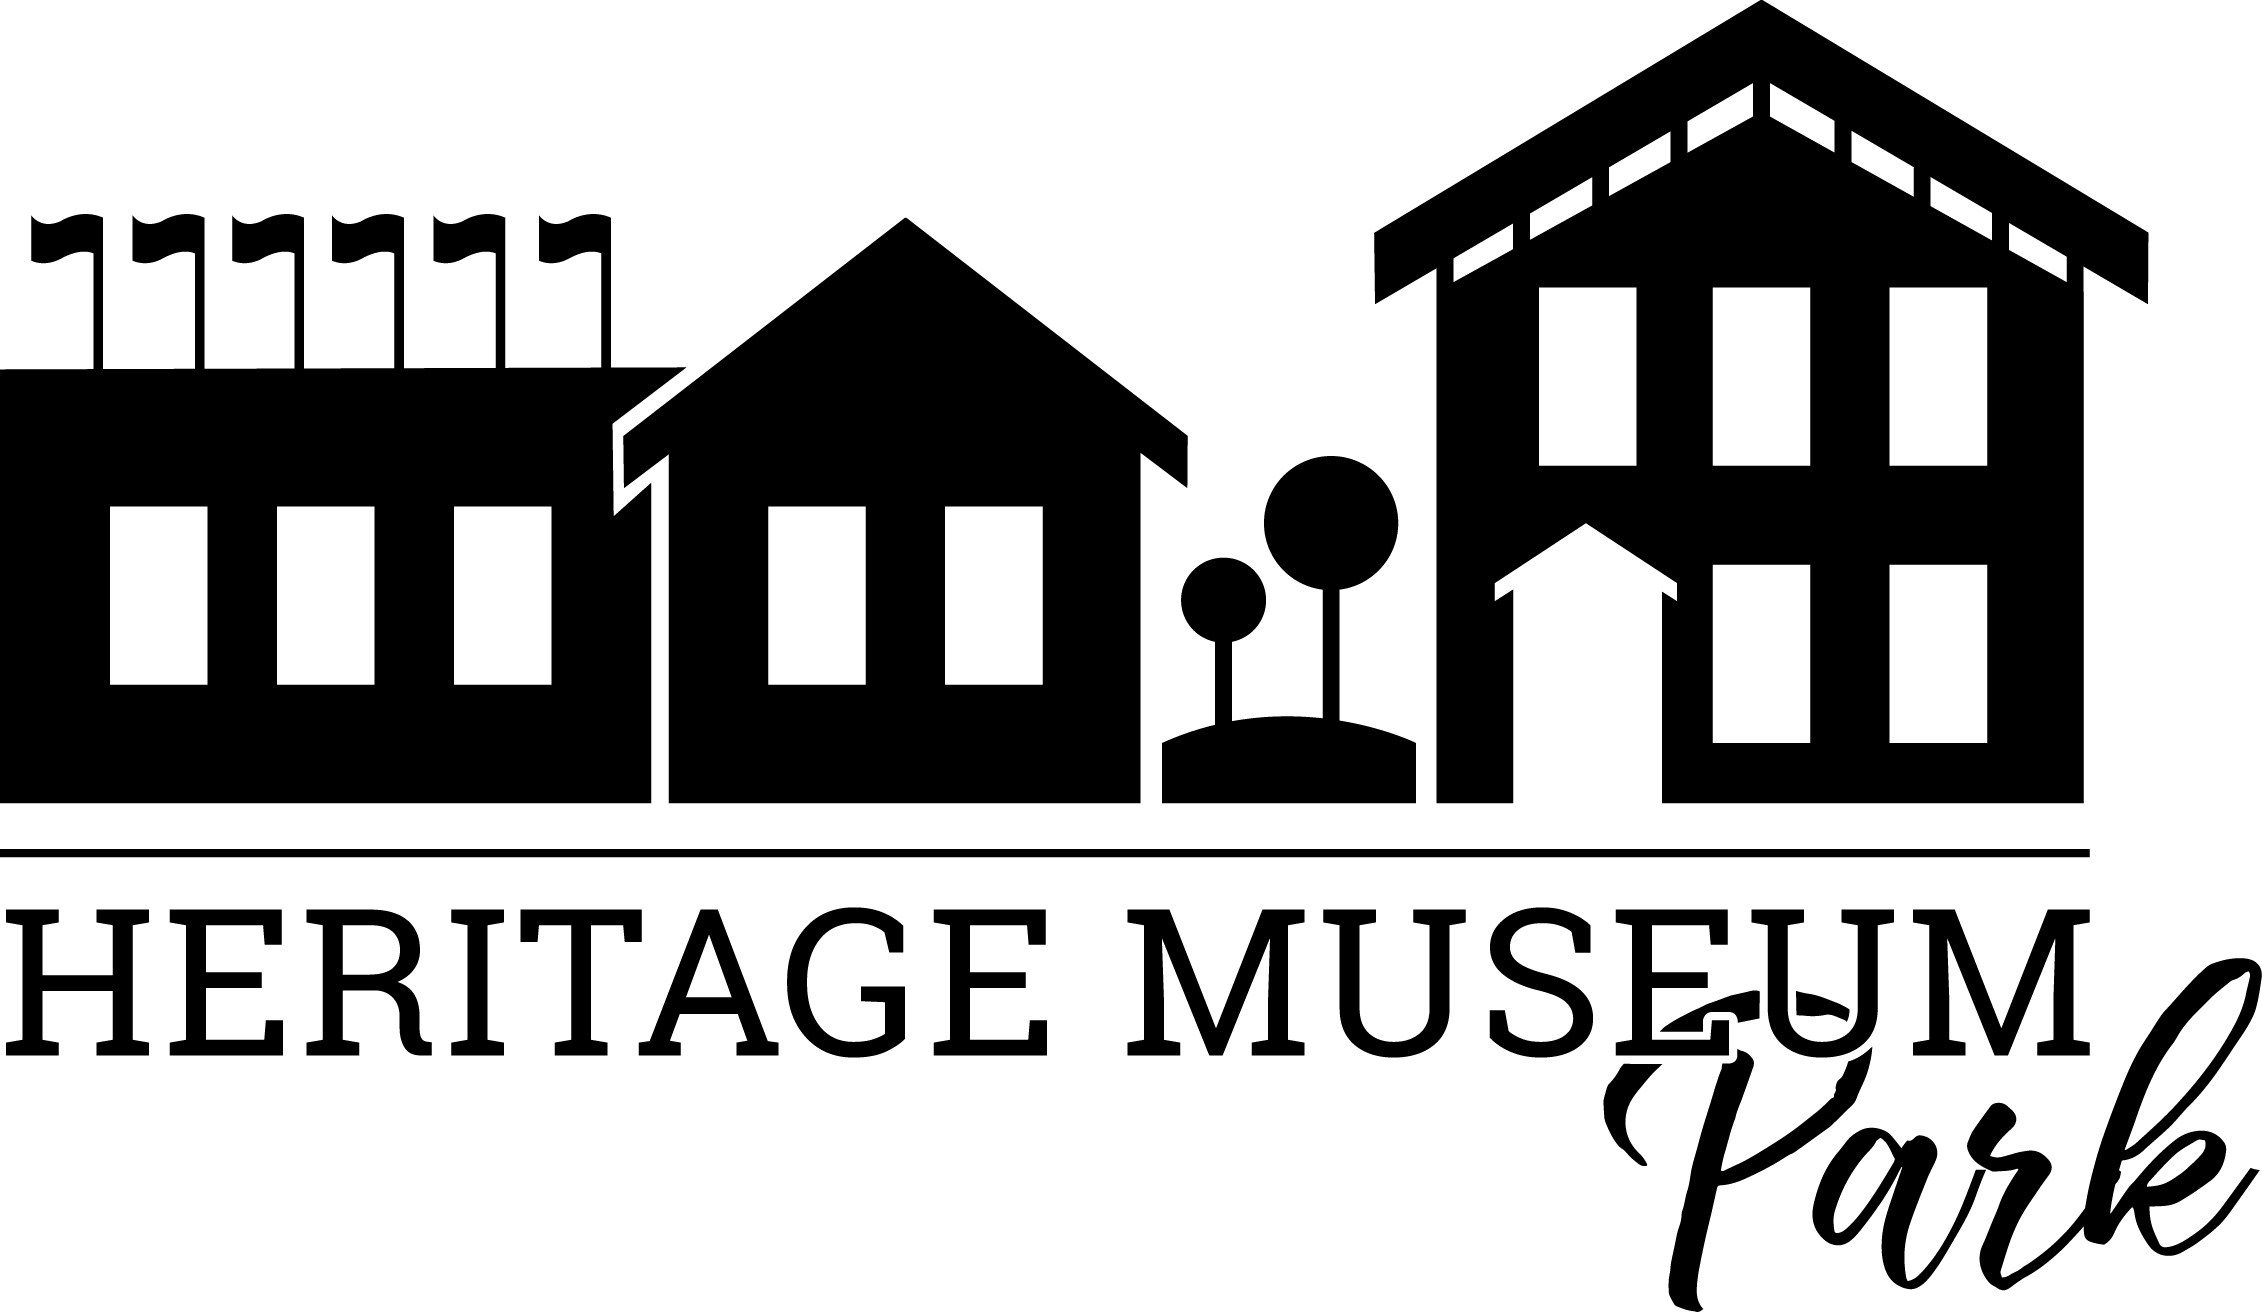 Heritage Museum Park logo